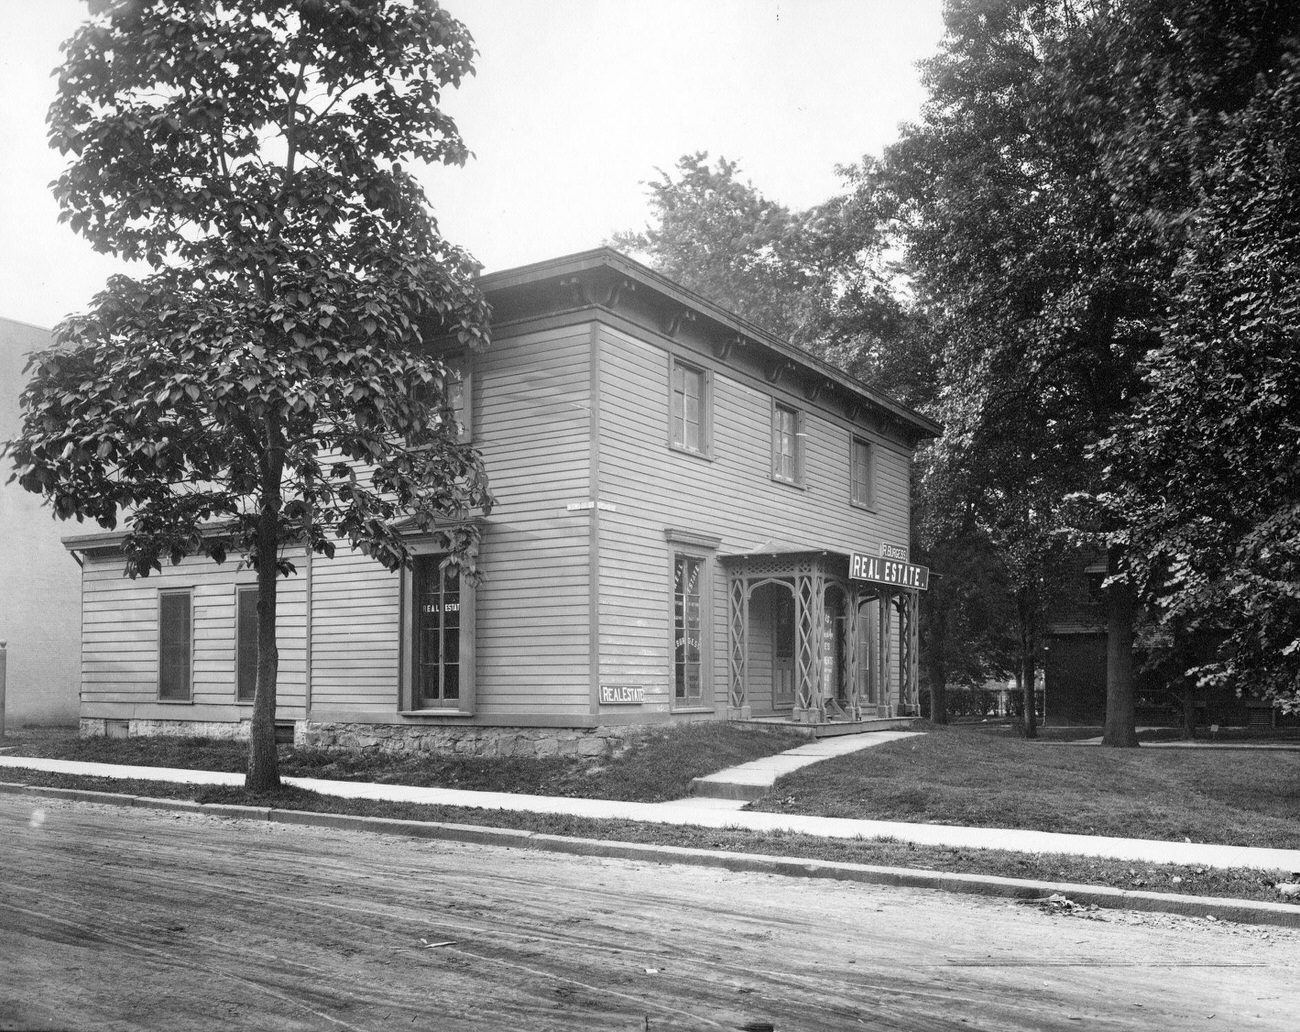 Real Estate Office Of R Burgess In Flatbush, Brooklyn, 1895.